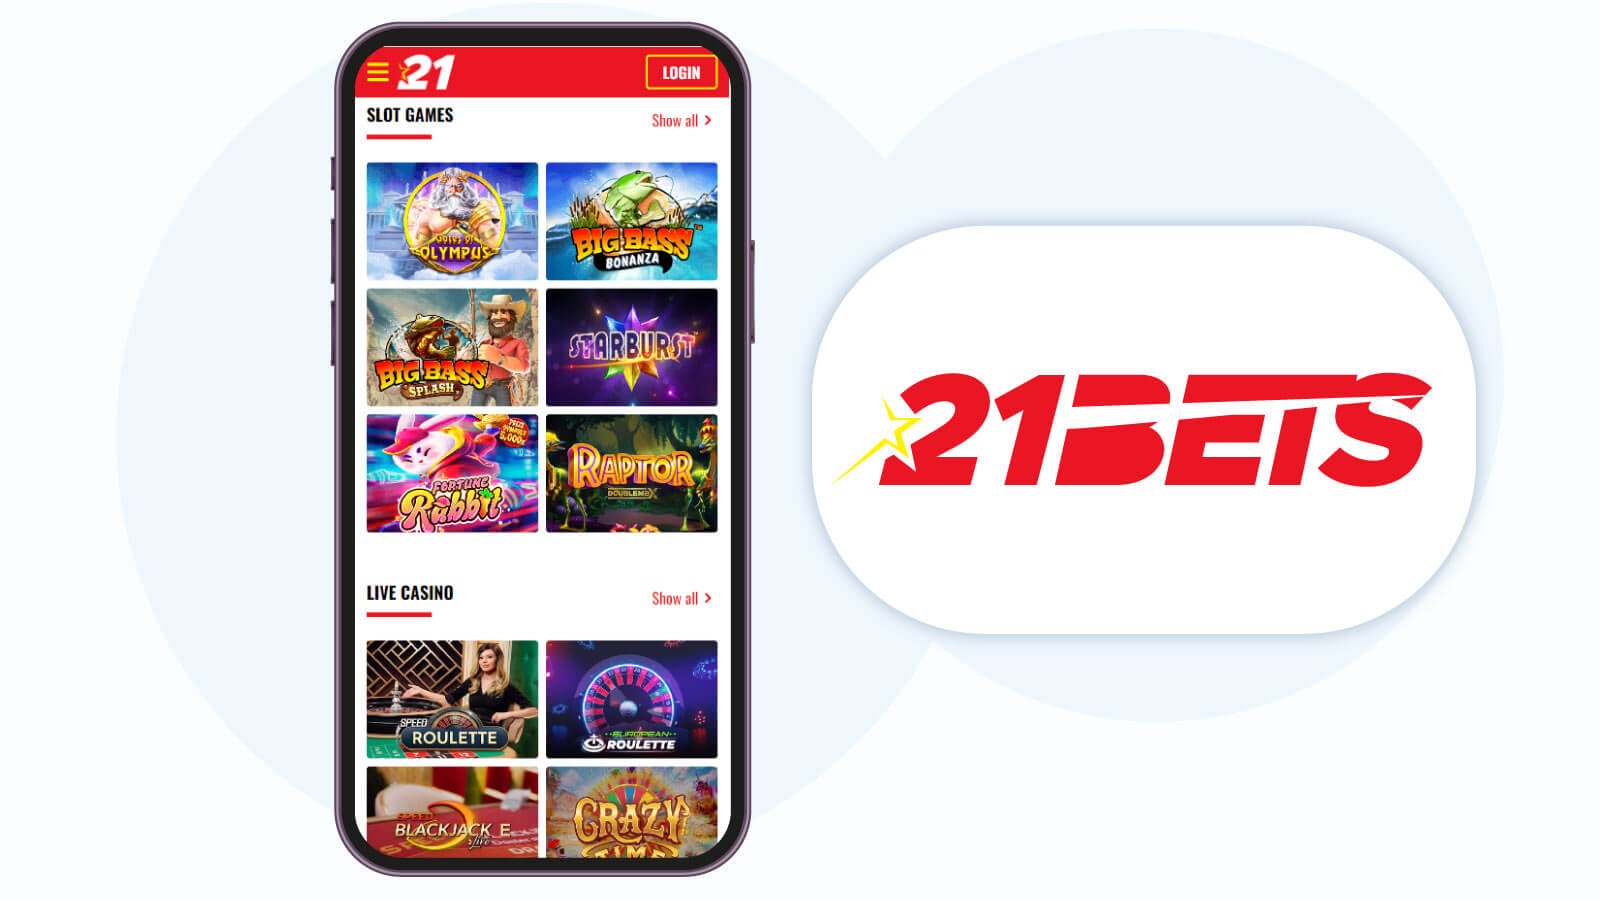 10-21Bets-Casino-Generous-Casino-Bonus-Available-Best-Experienced-on-Mobile